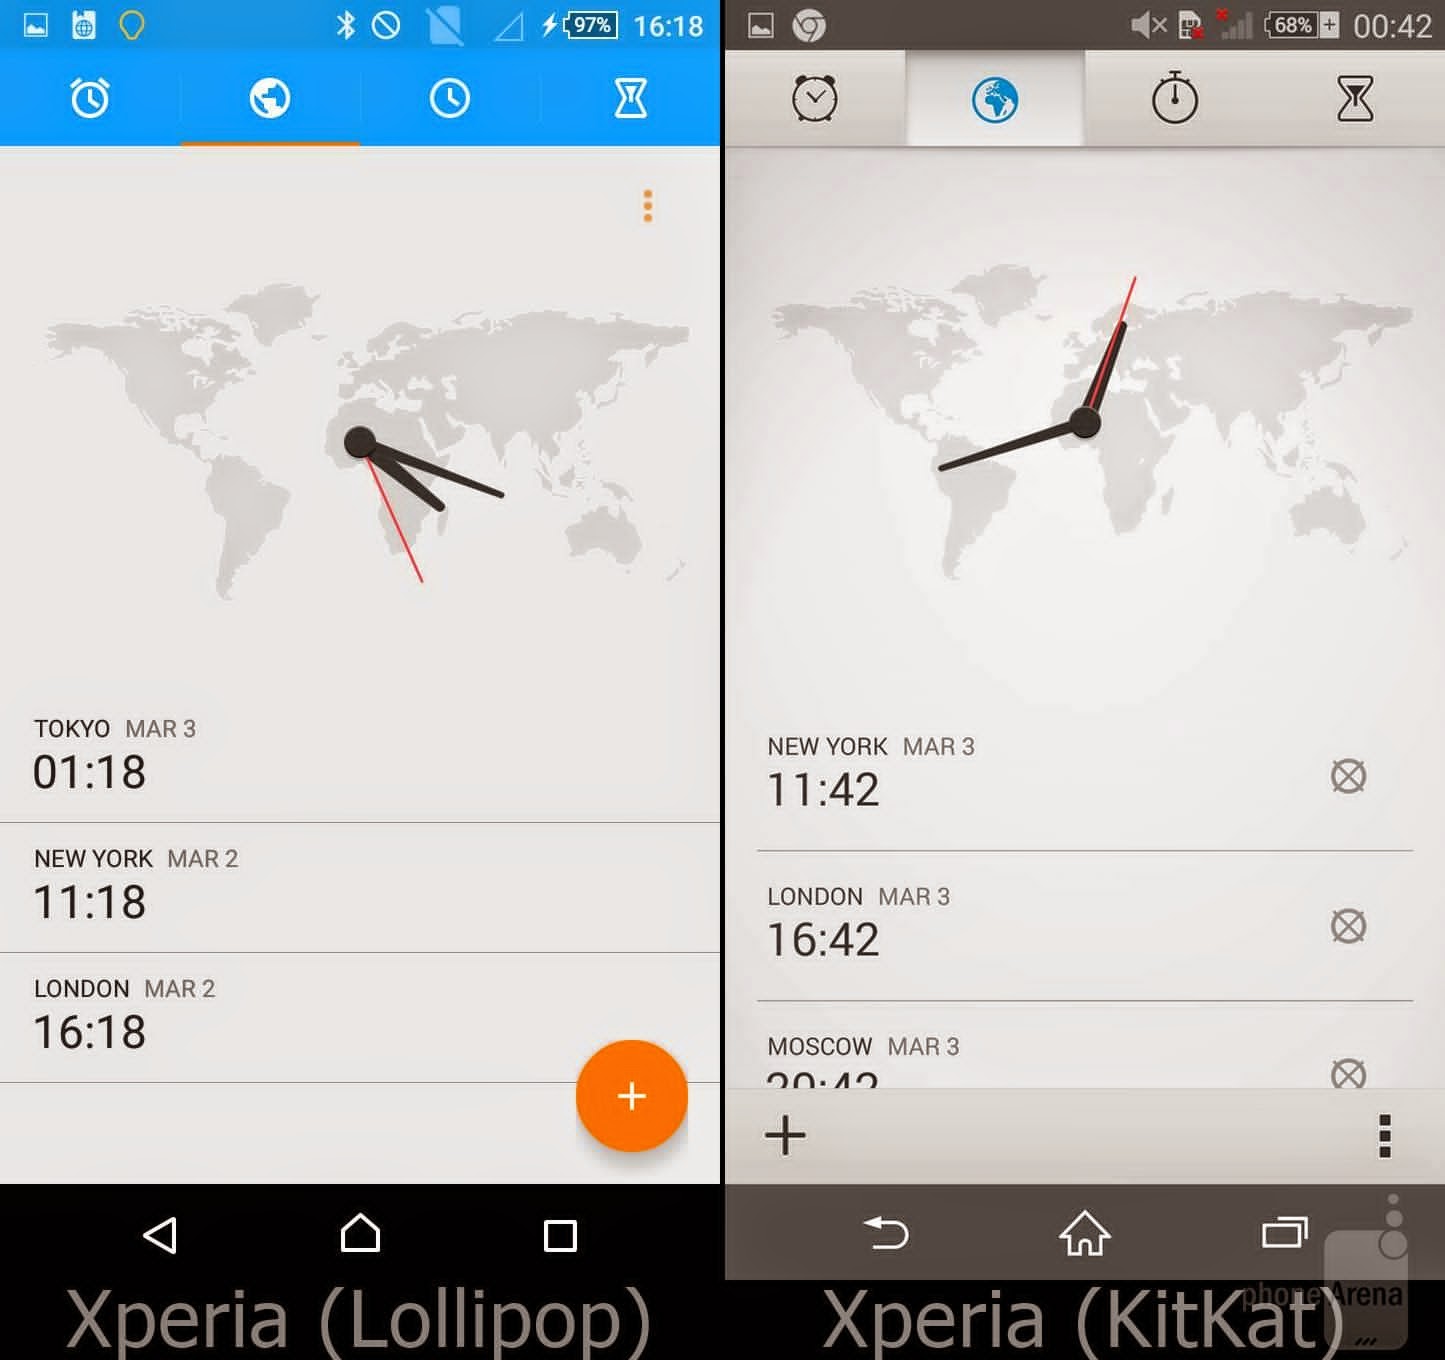 Sony xperia сравнение. Xperia UI. Сравнение Xperia. Сравнение UI. Comparison UI.